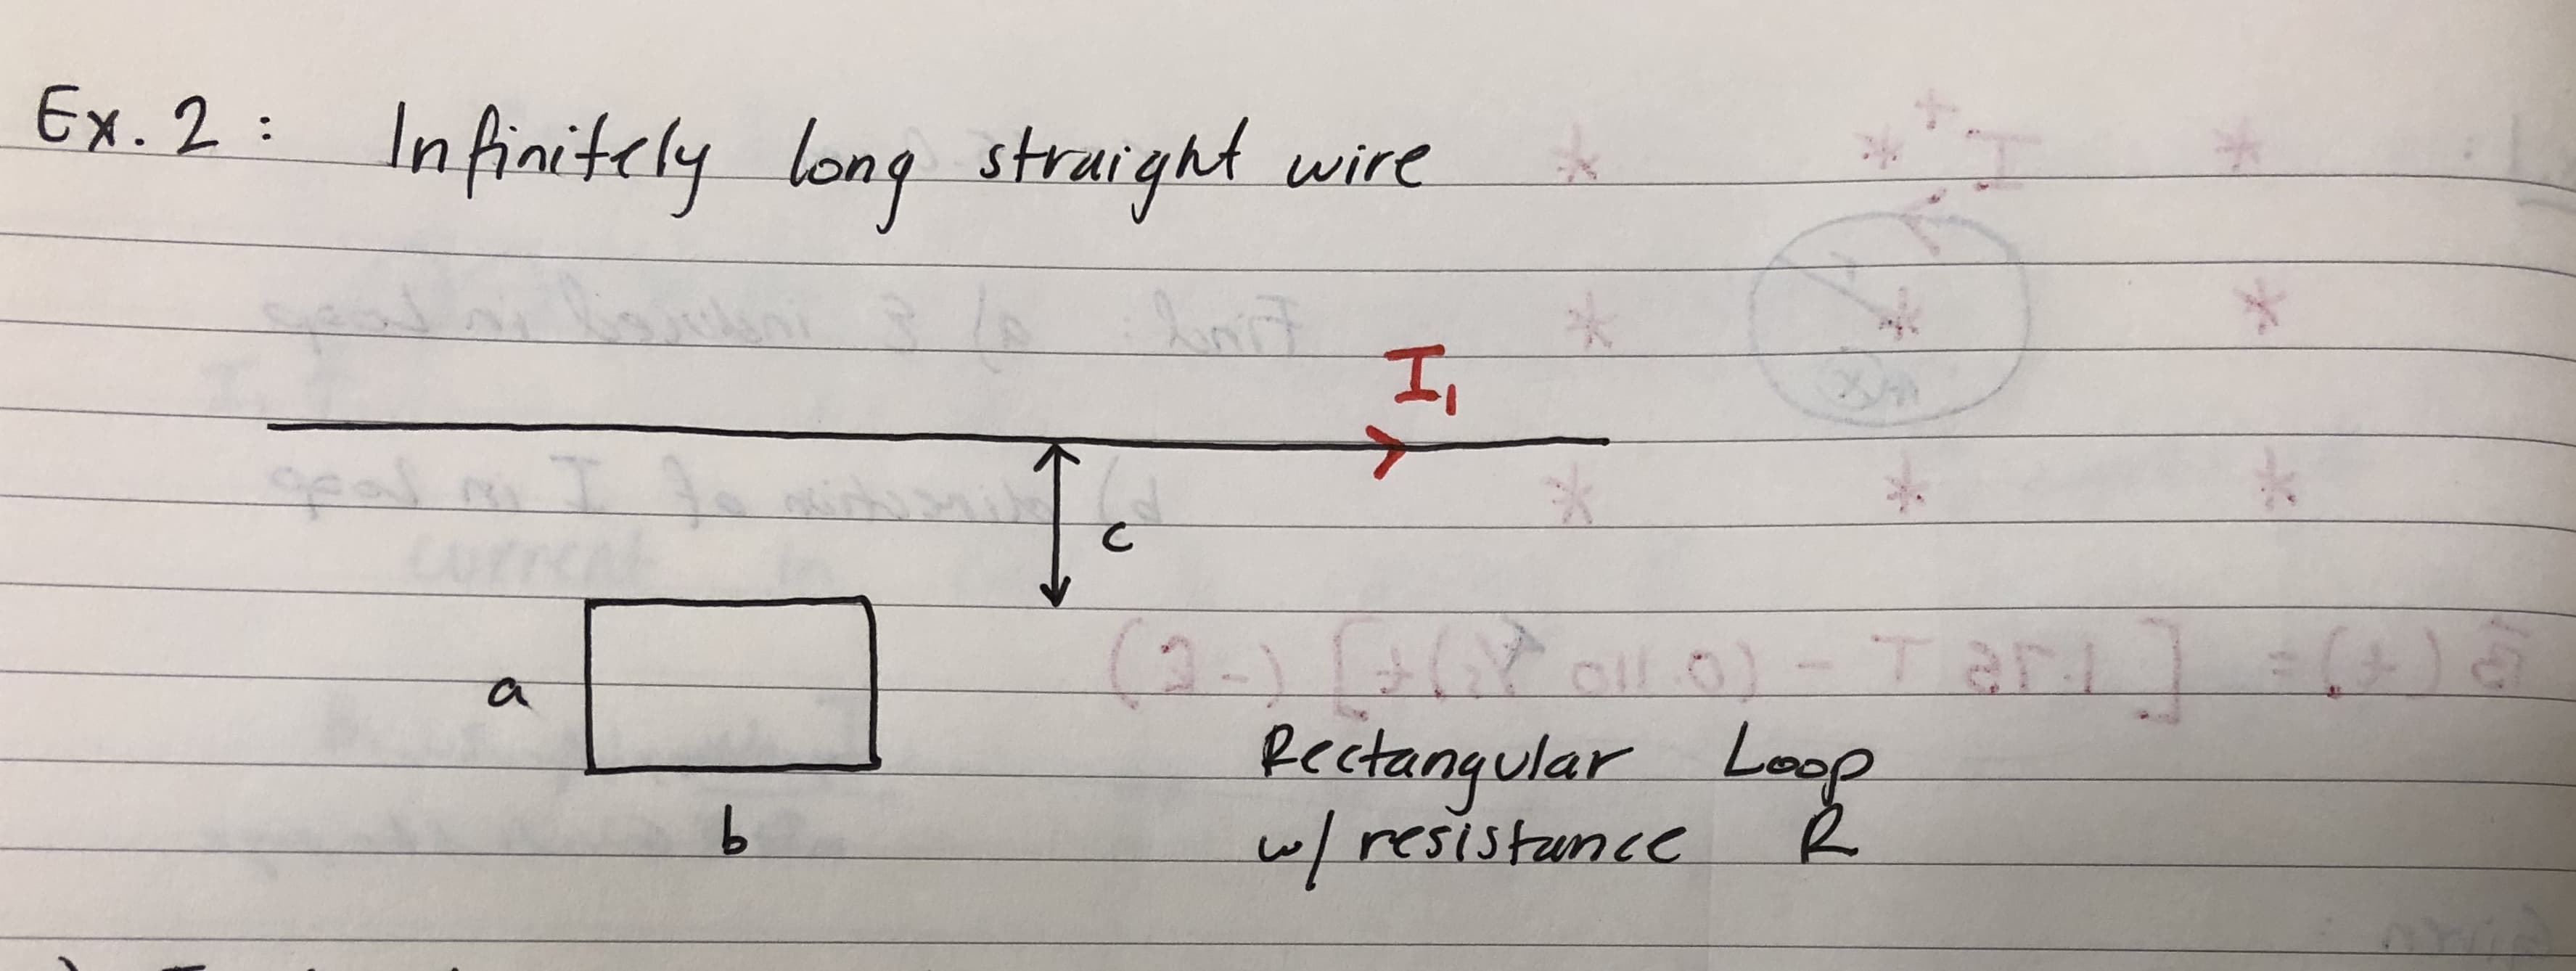 Ex. 2: Infiaitely long straight wire
(२
)
Tand
Pectanqular
Lap
resistuncC
